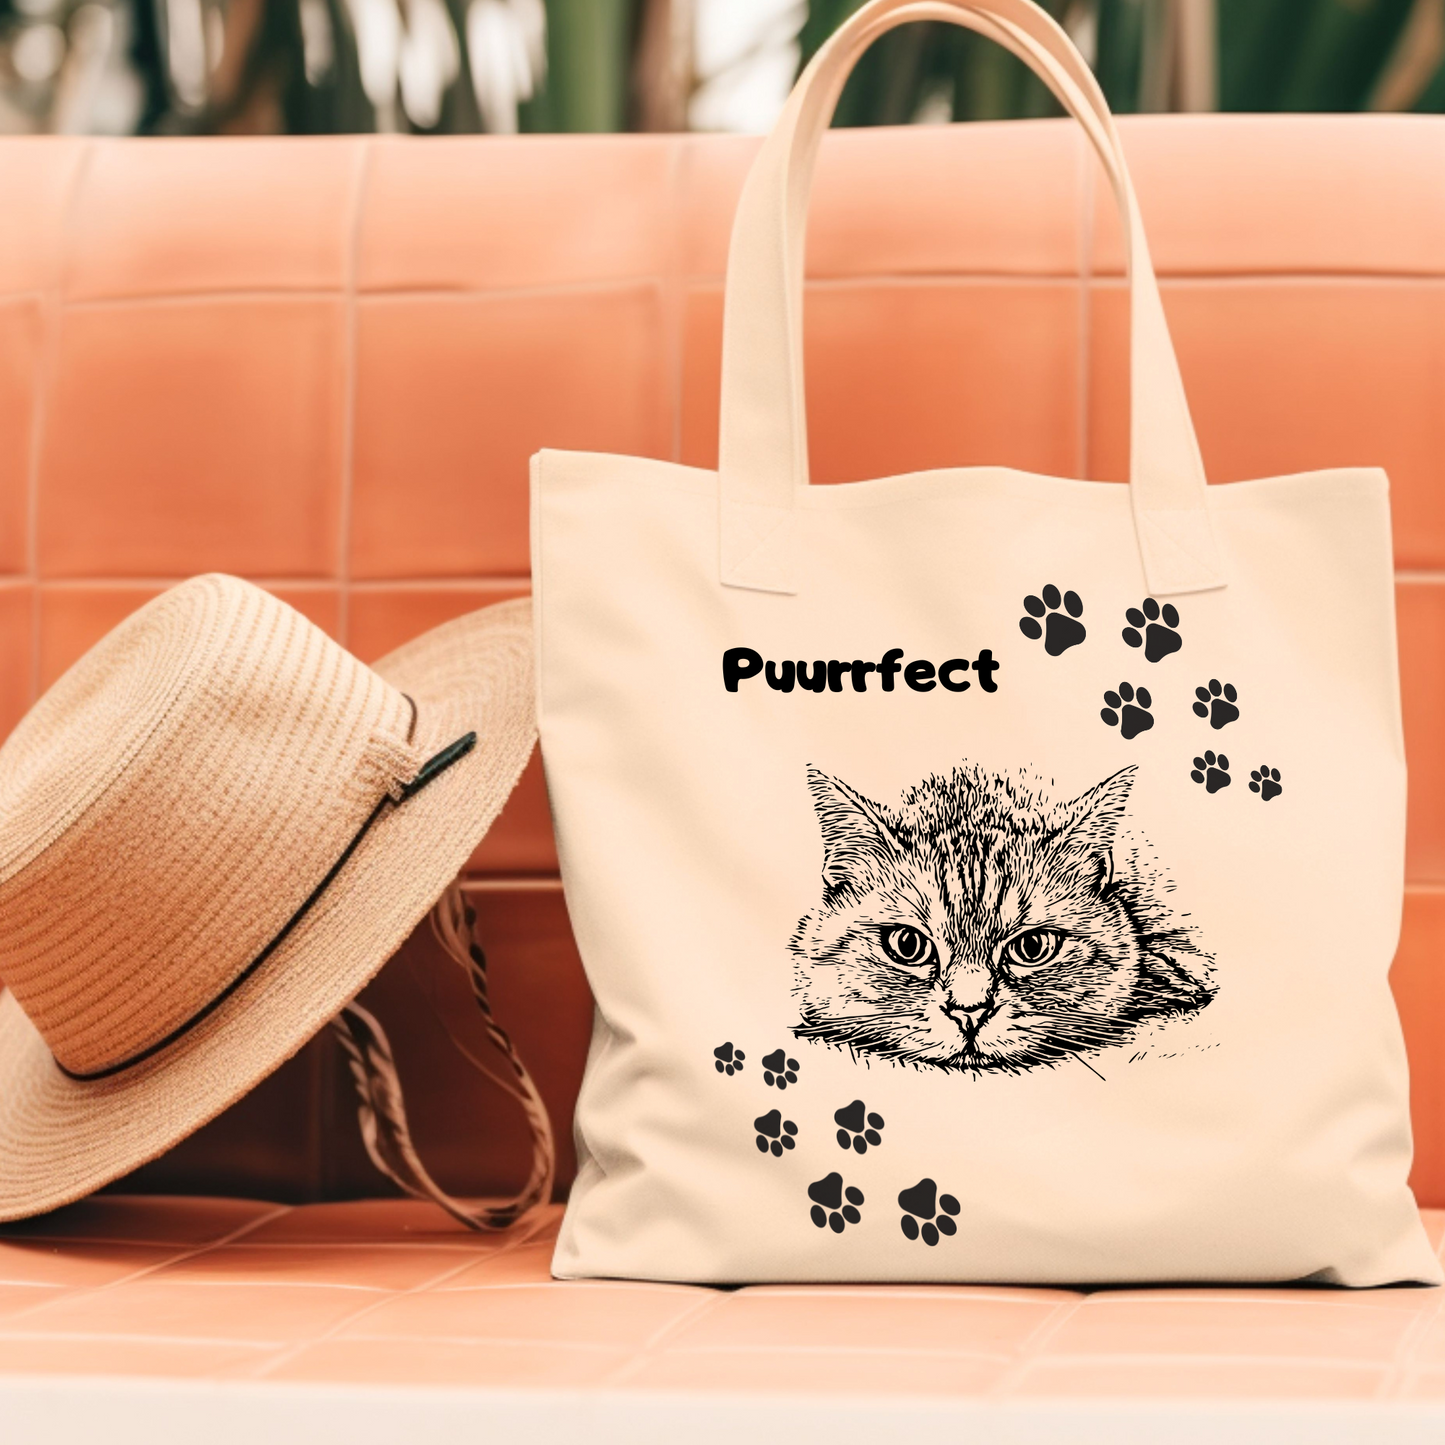 Pet-Lover Patio Pillow, "Puurfect" Motif, UV- & Mildew-Resistant